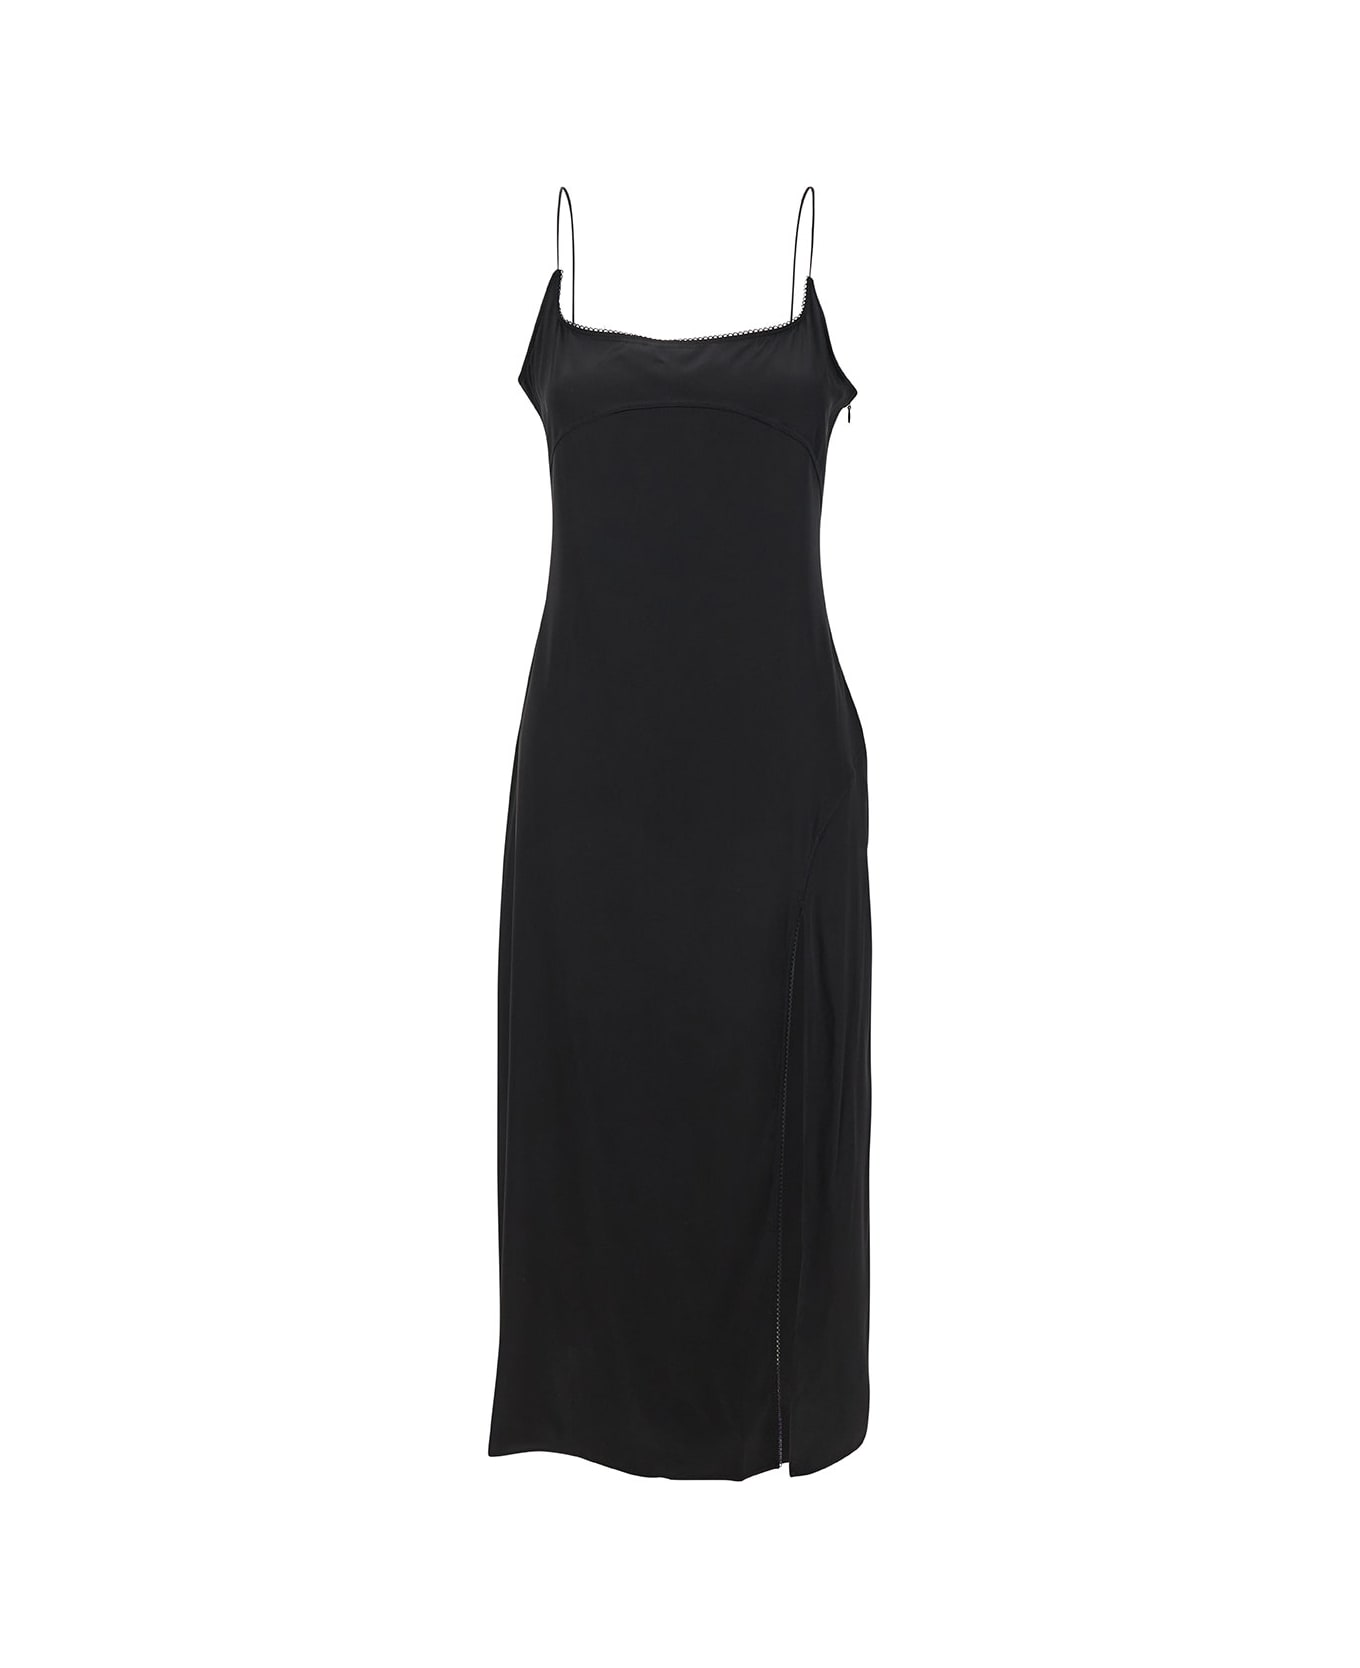 Jacquemus Notte Slip Dress - Black